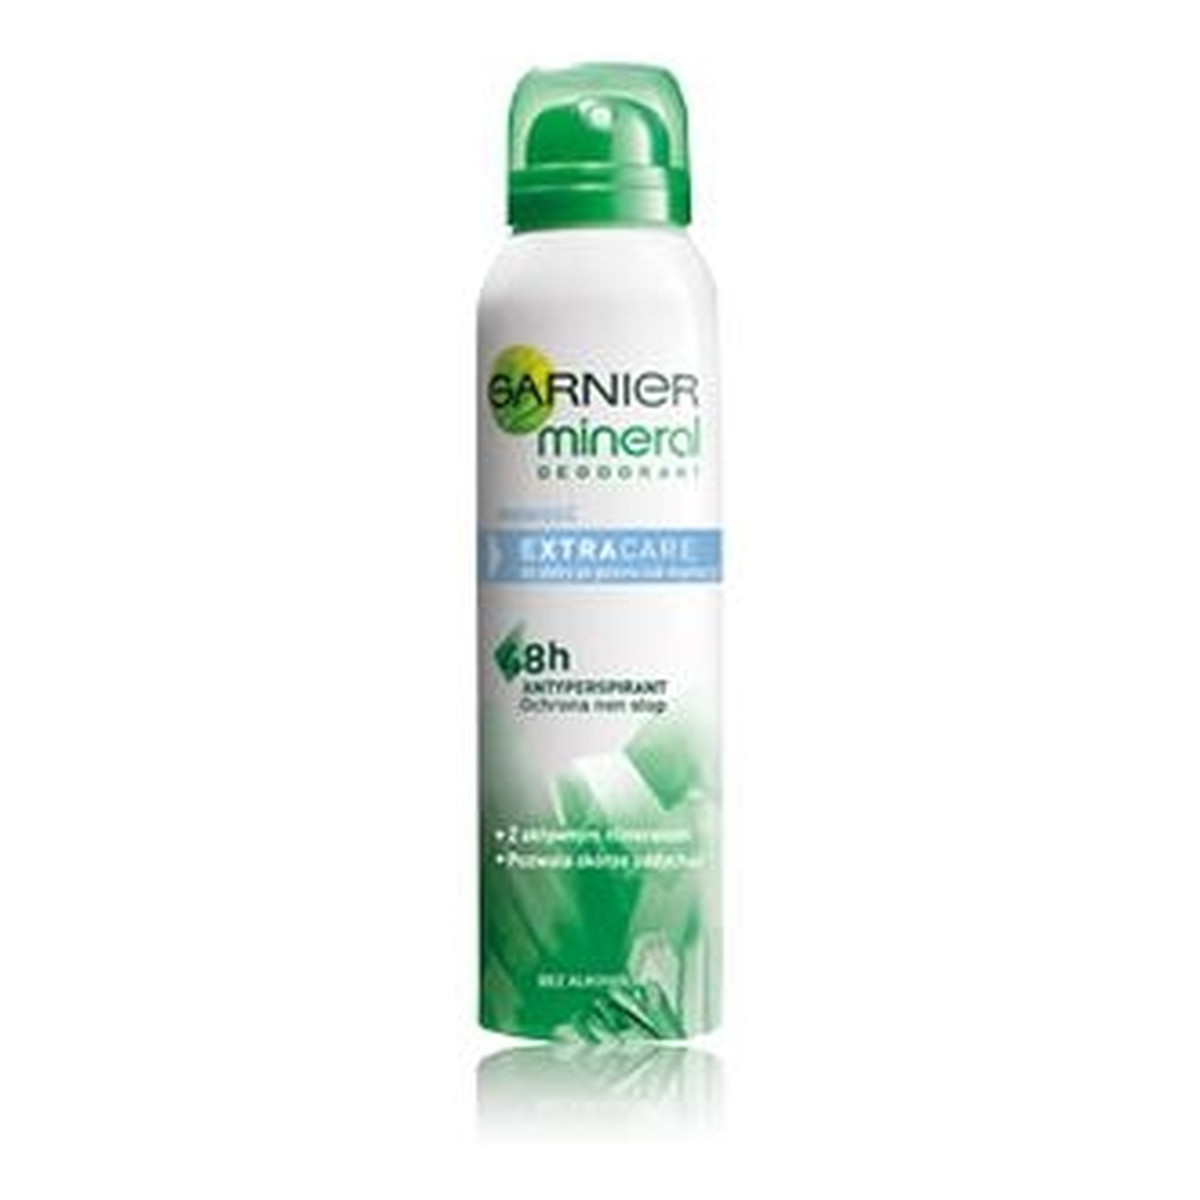 Garnier Mineral Dezodorant Extra Care Spray 150ml